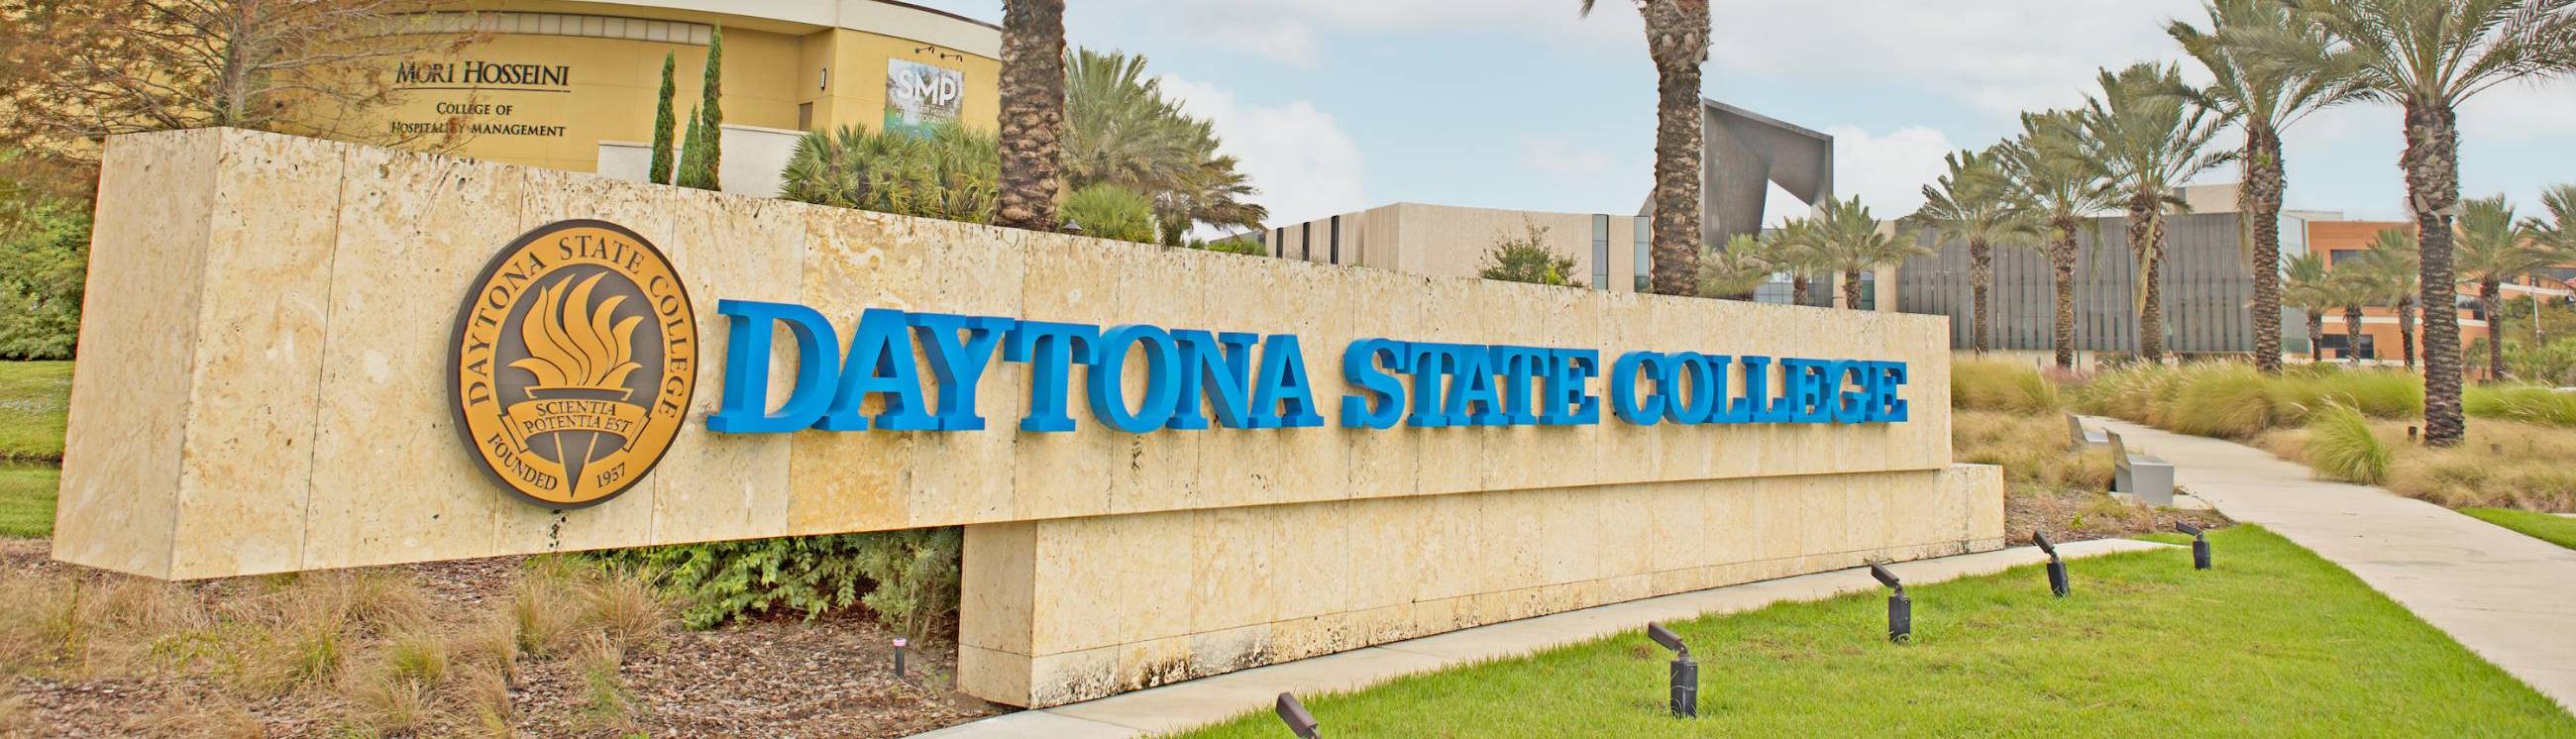 Daytona Beach campus street sign